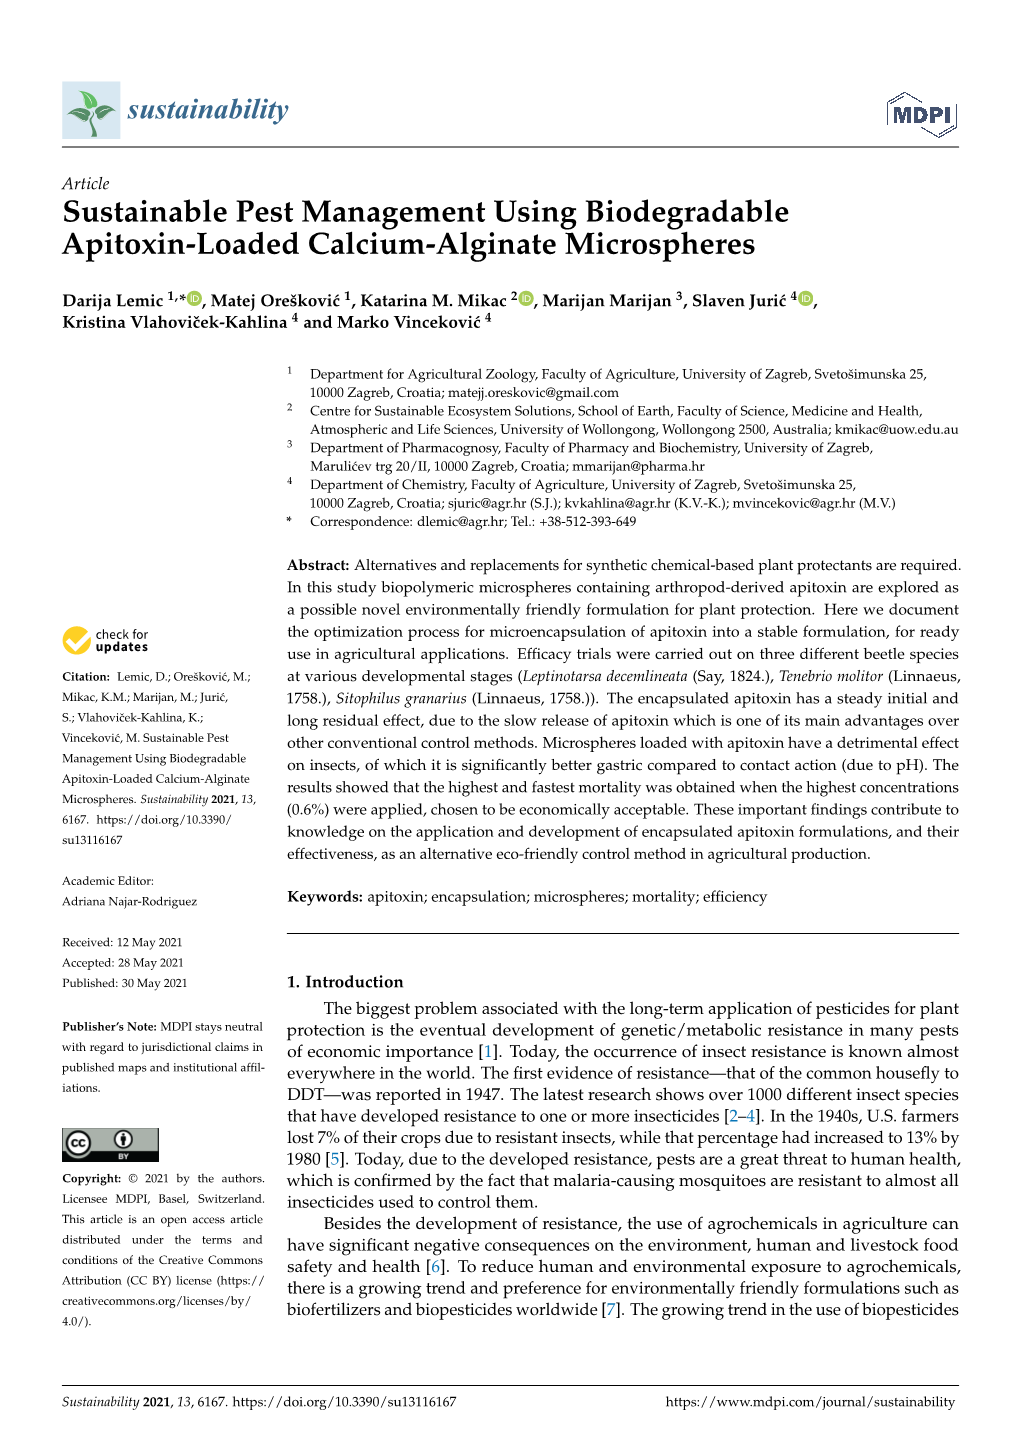 Sustainable Pest Management Using Biodegradable Apitoxin-Loaded Calcium-Alginate Microspheres